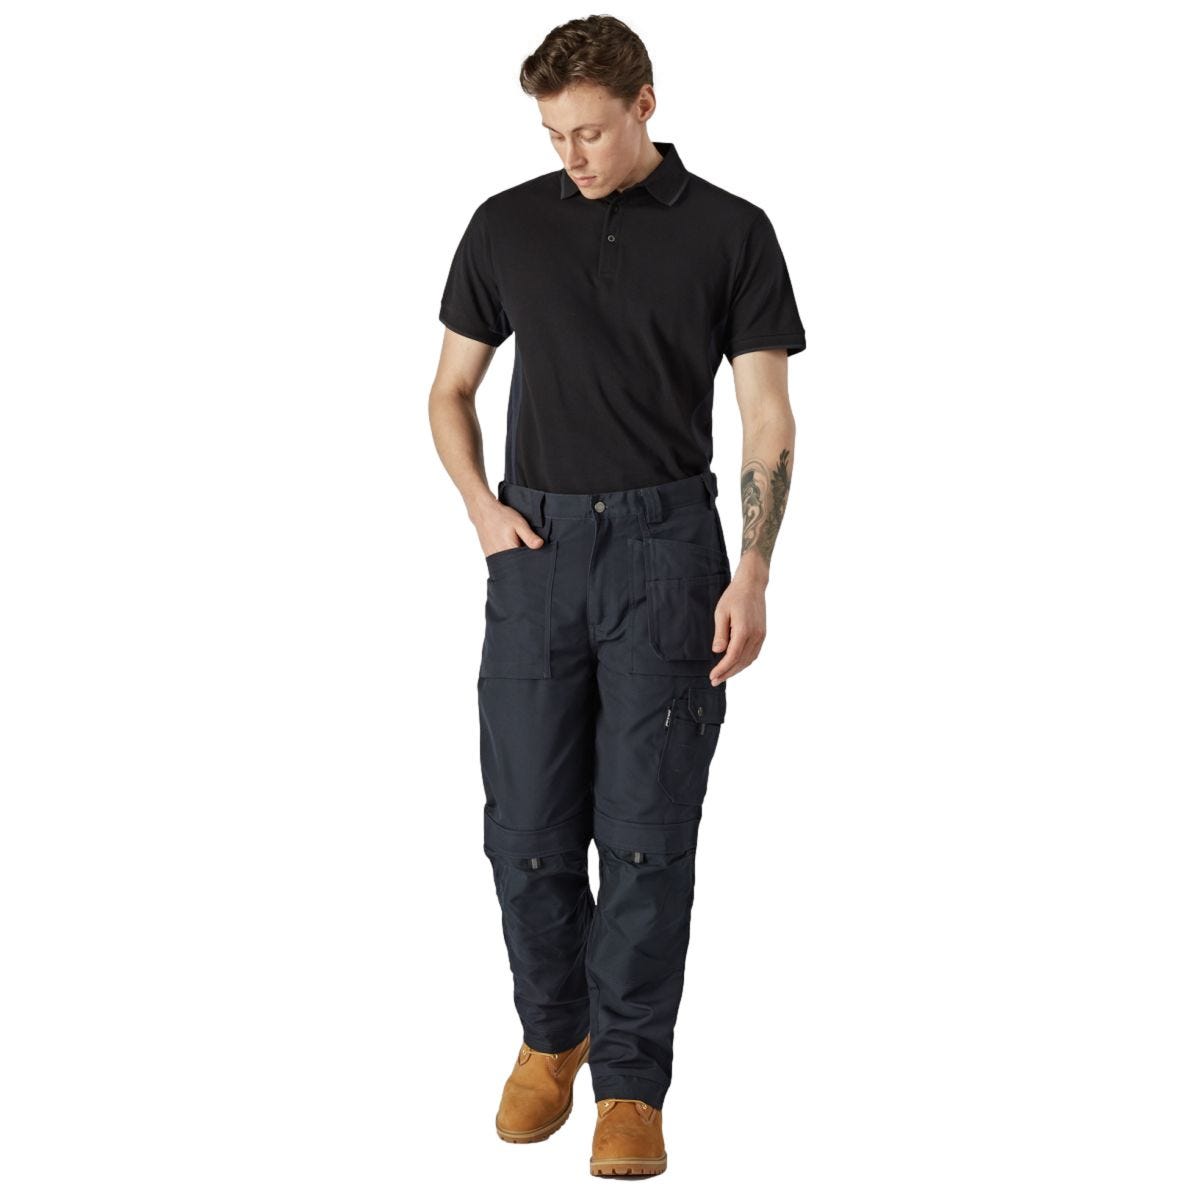 Pantalon Eisenhower multi-poches Bleu marine - Dickies - Taille 40 2